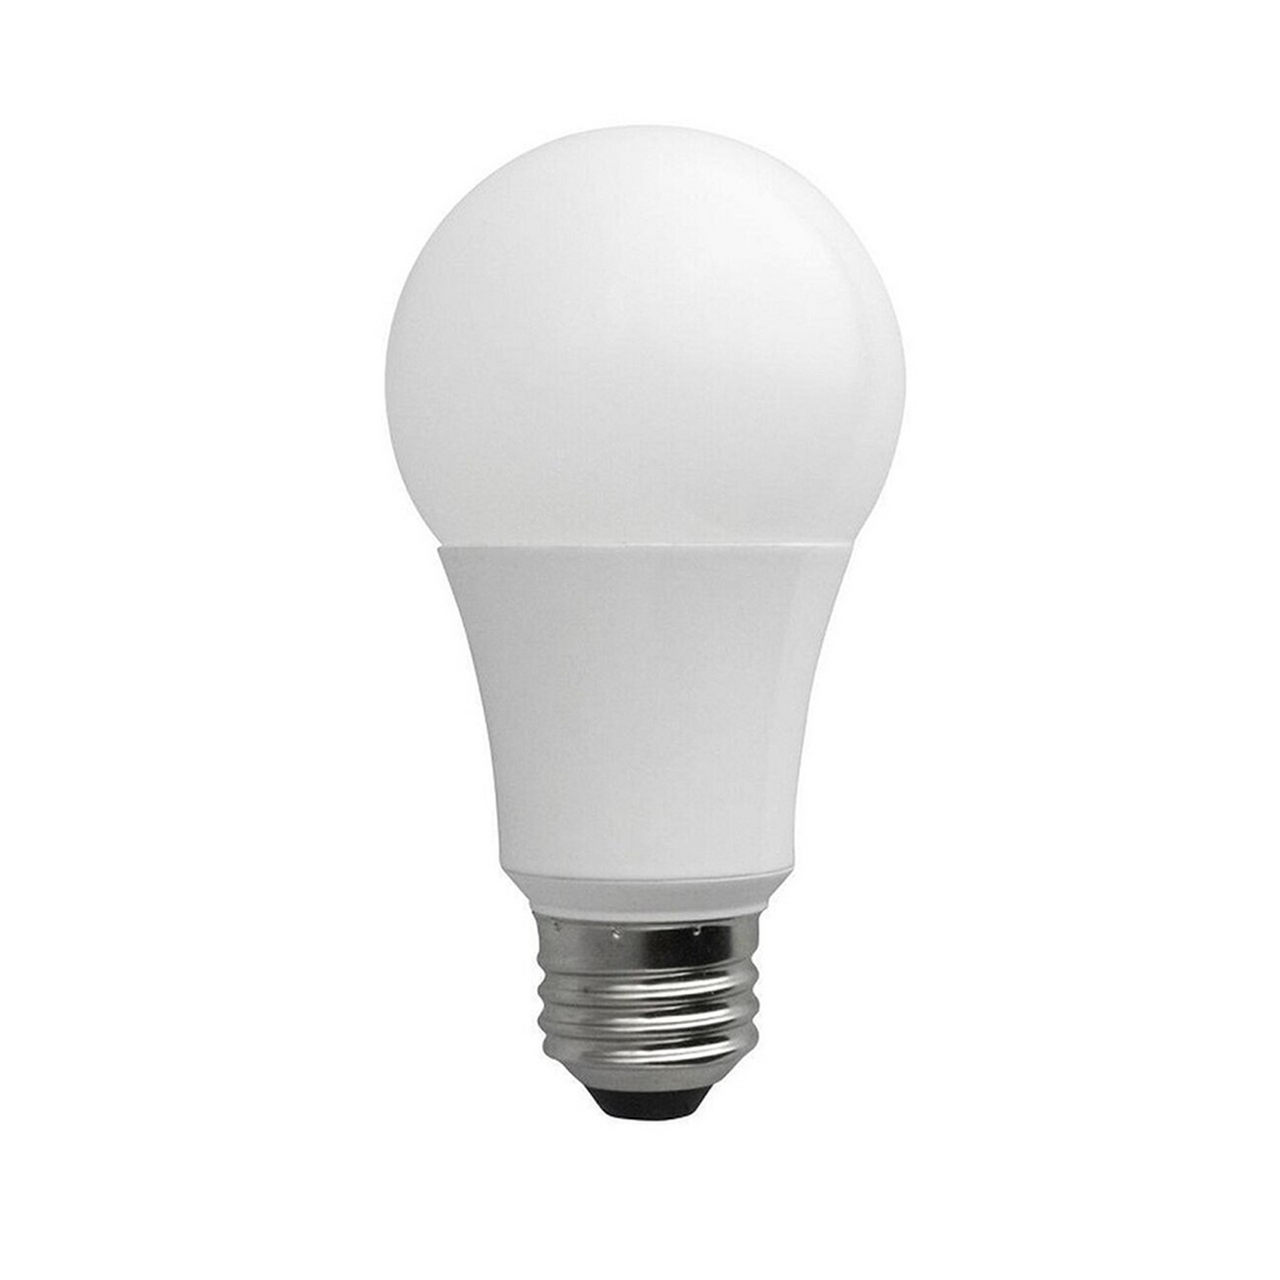 120-277 V LED 4000K Light Bulb | CityLightsUSA.com